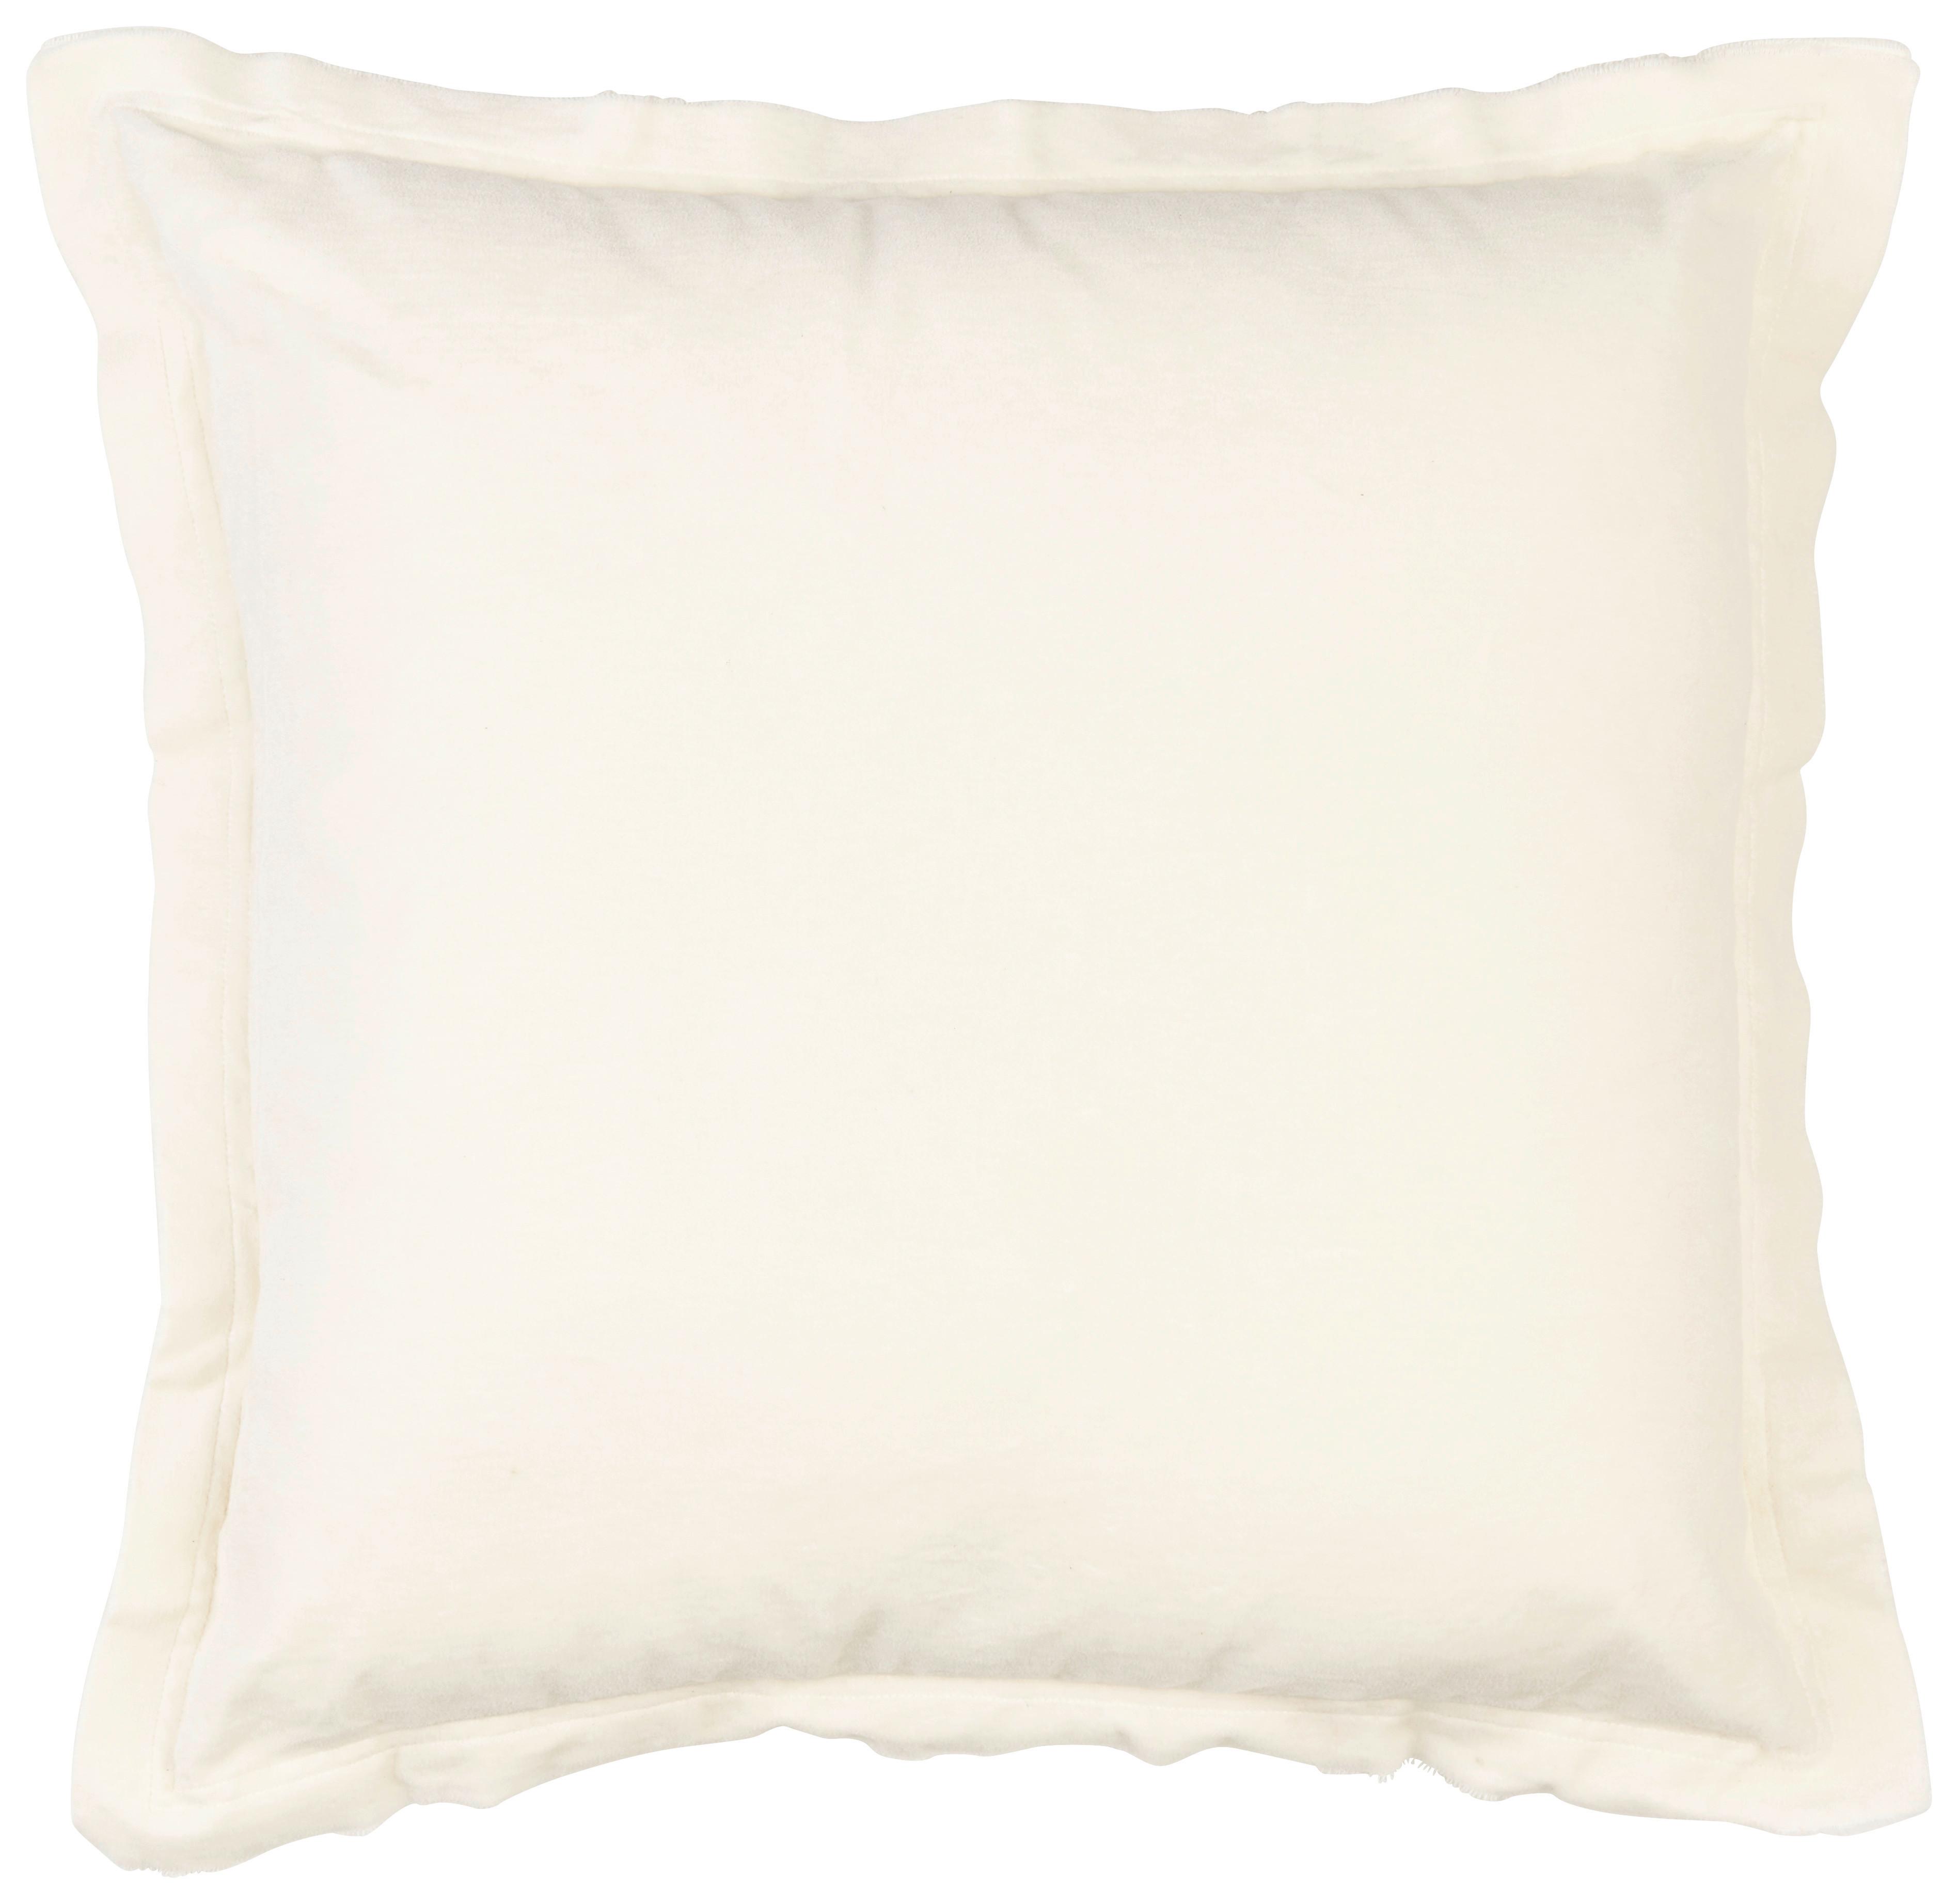 Dekorační Polštář Stella, 45/45cm, Bílá - bílá, Romantický / Rustikální, textil (45/45cm) - Premium Living